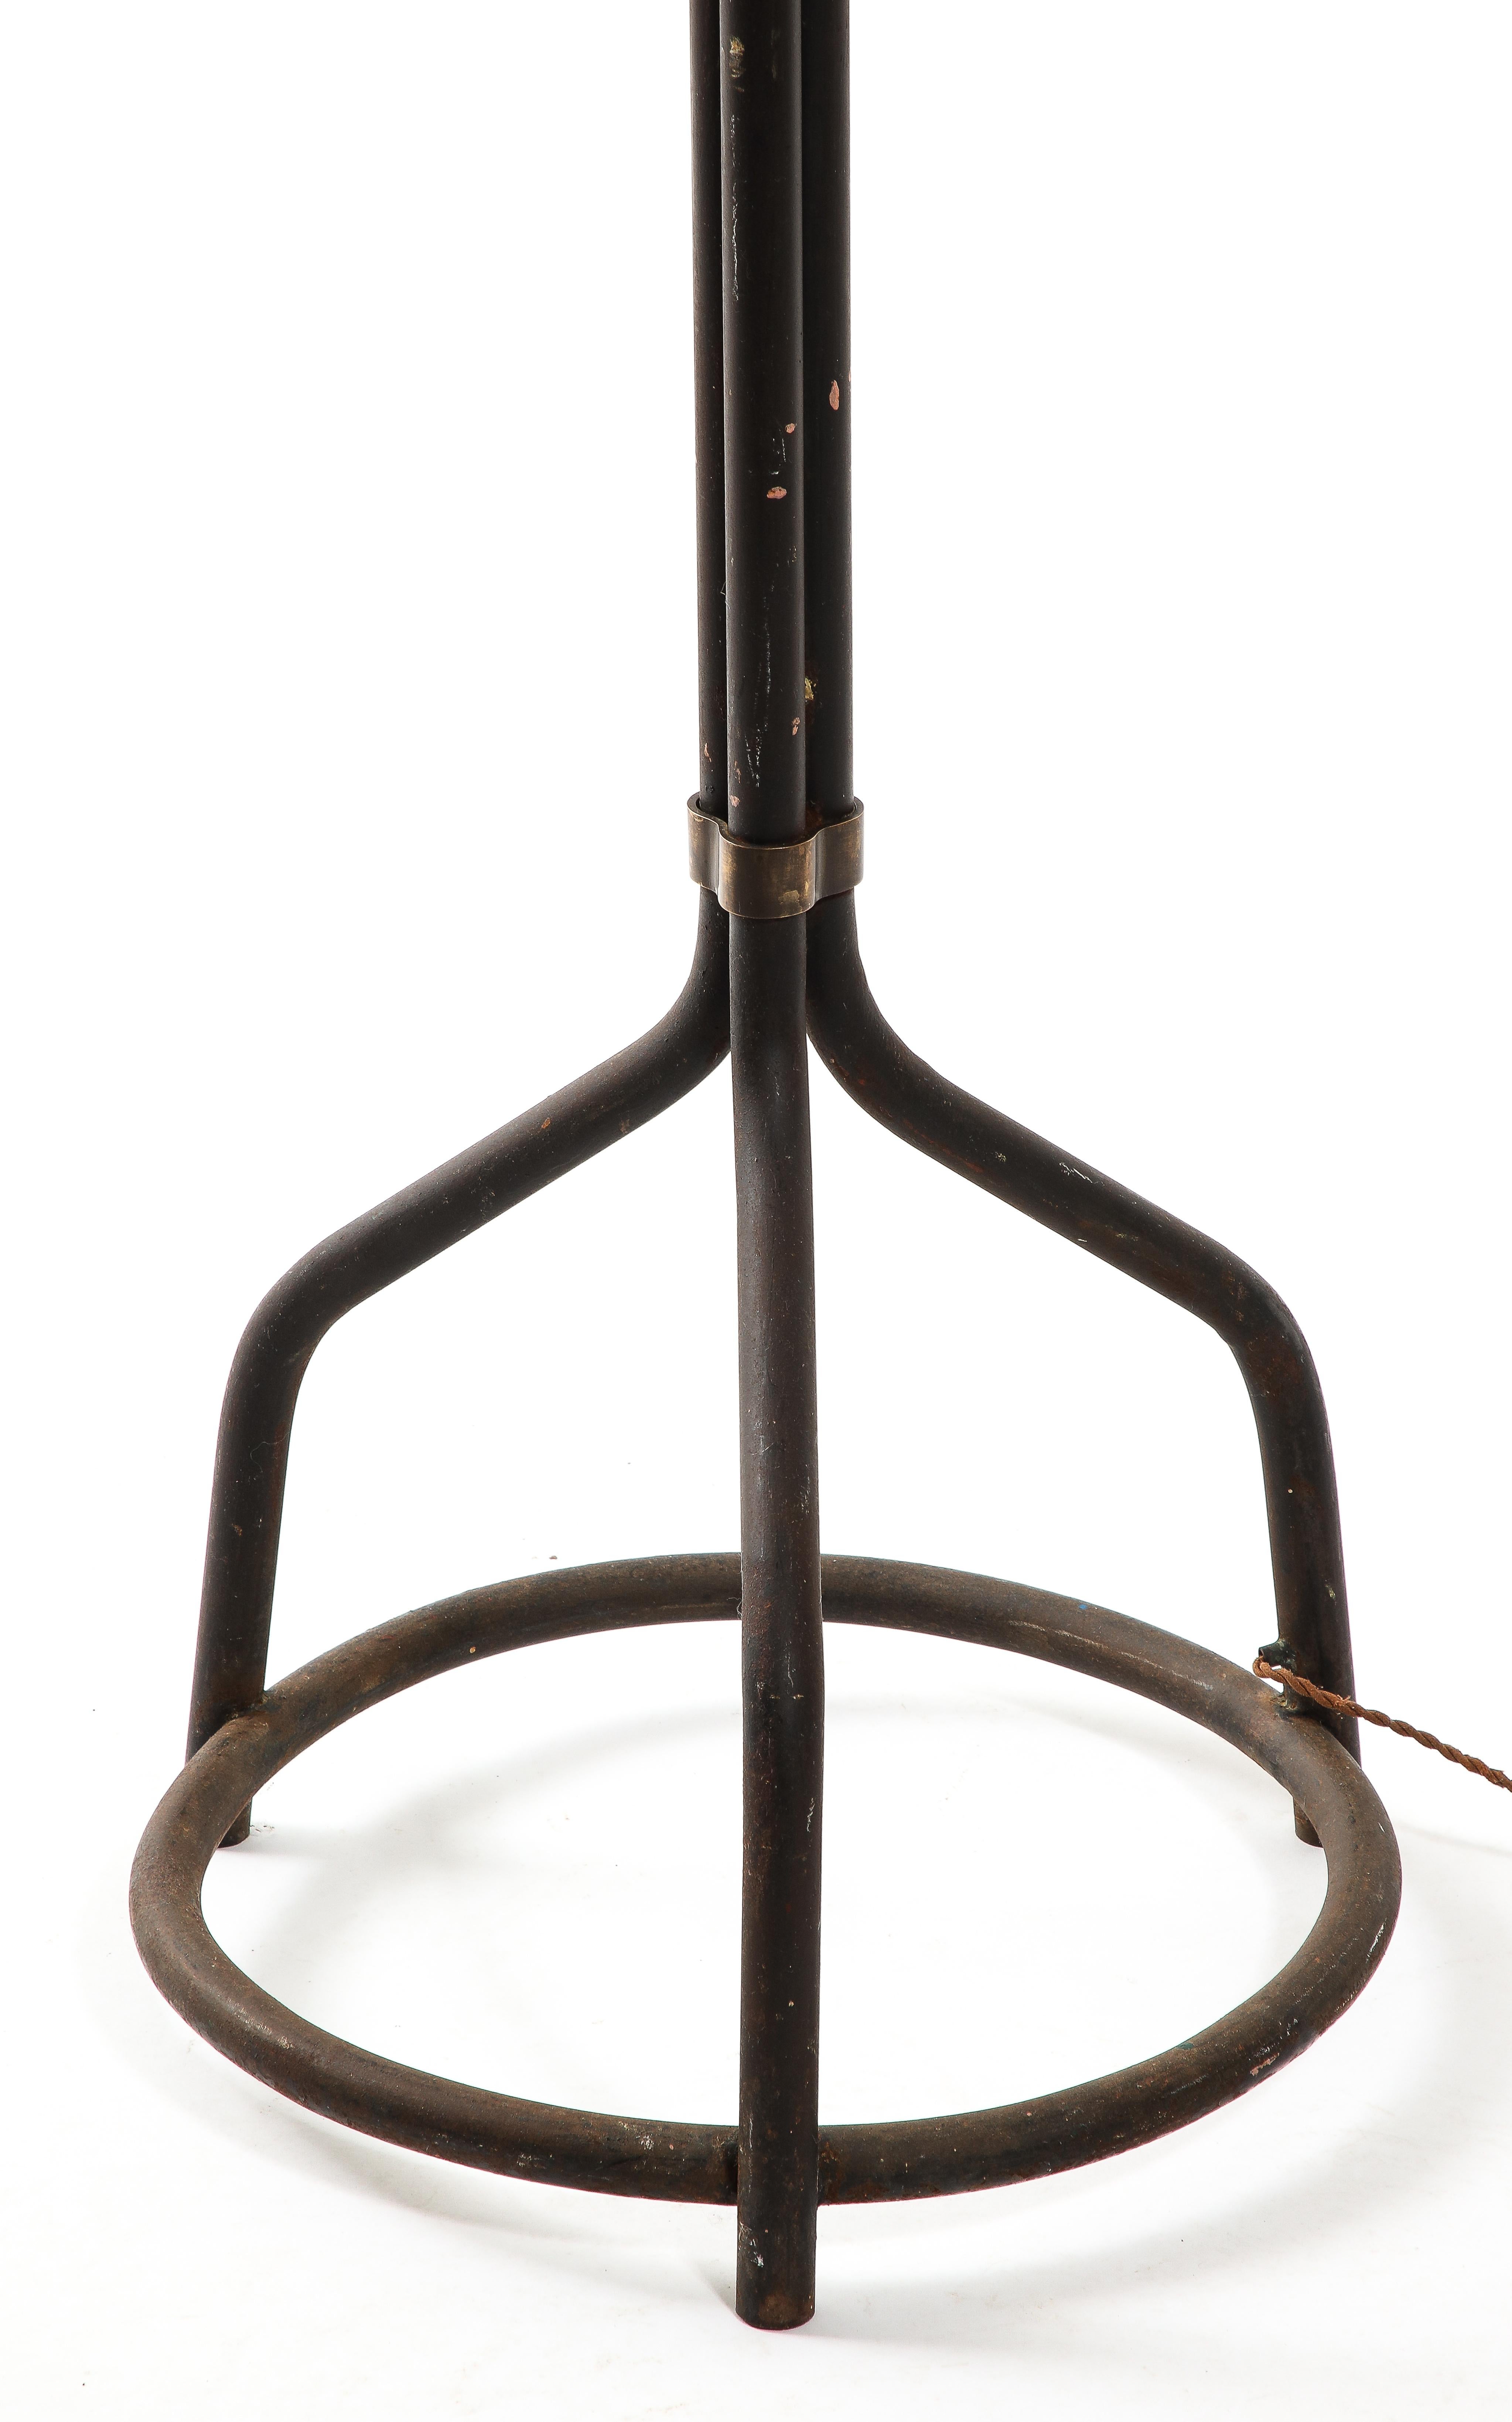 Brutalist Tripod Steel Tube Floor Lamp with Brass Details - France 1970's For Sale 1